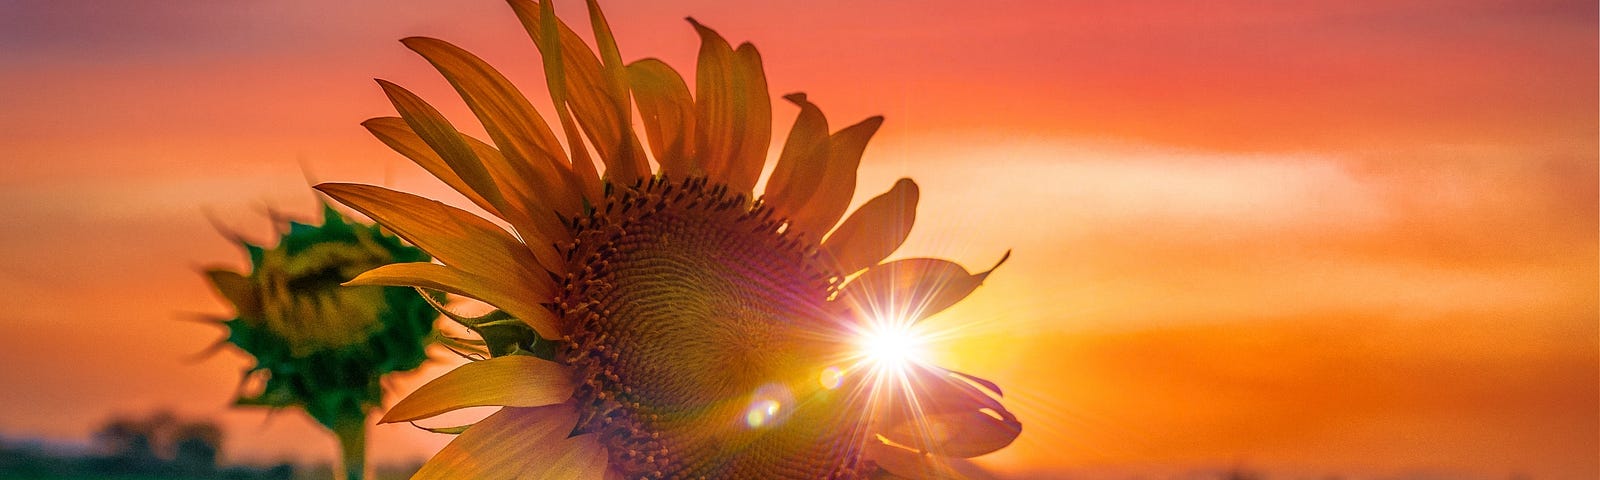 Sunflower at Sunset. Photo by Rehan Shaik on Unsplash